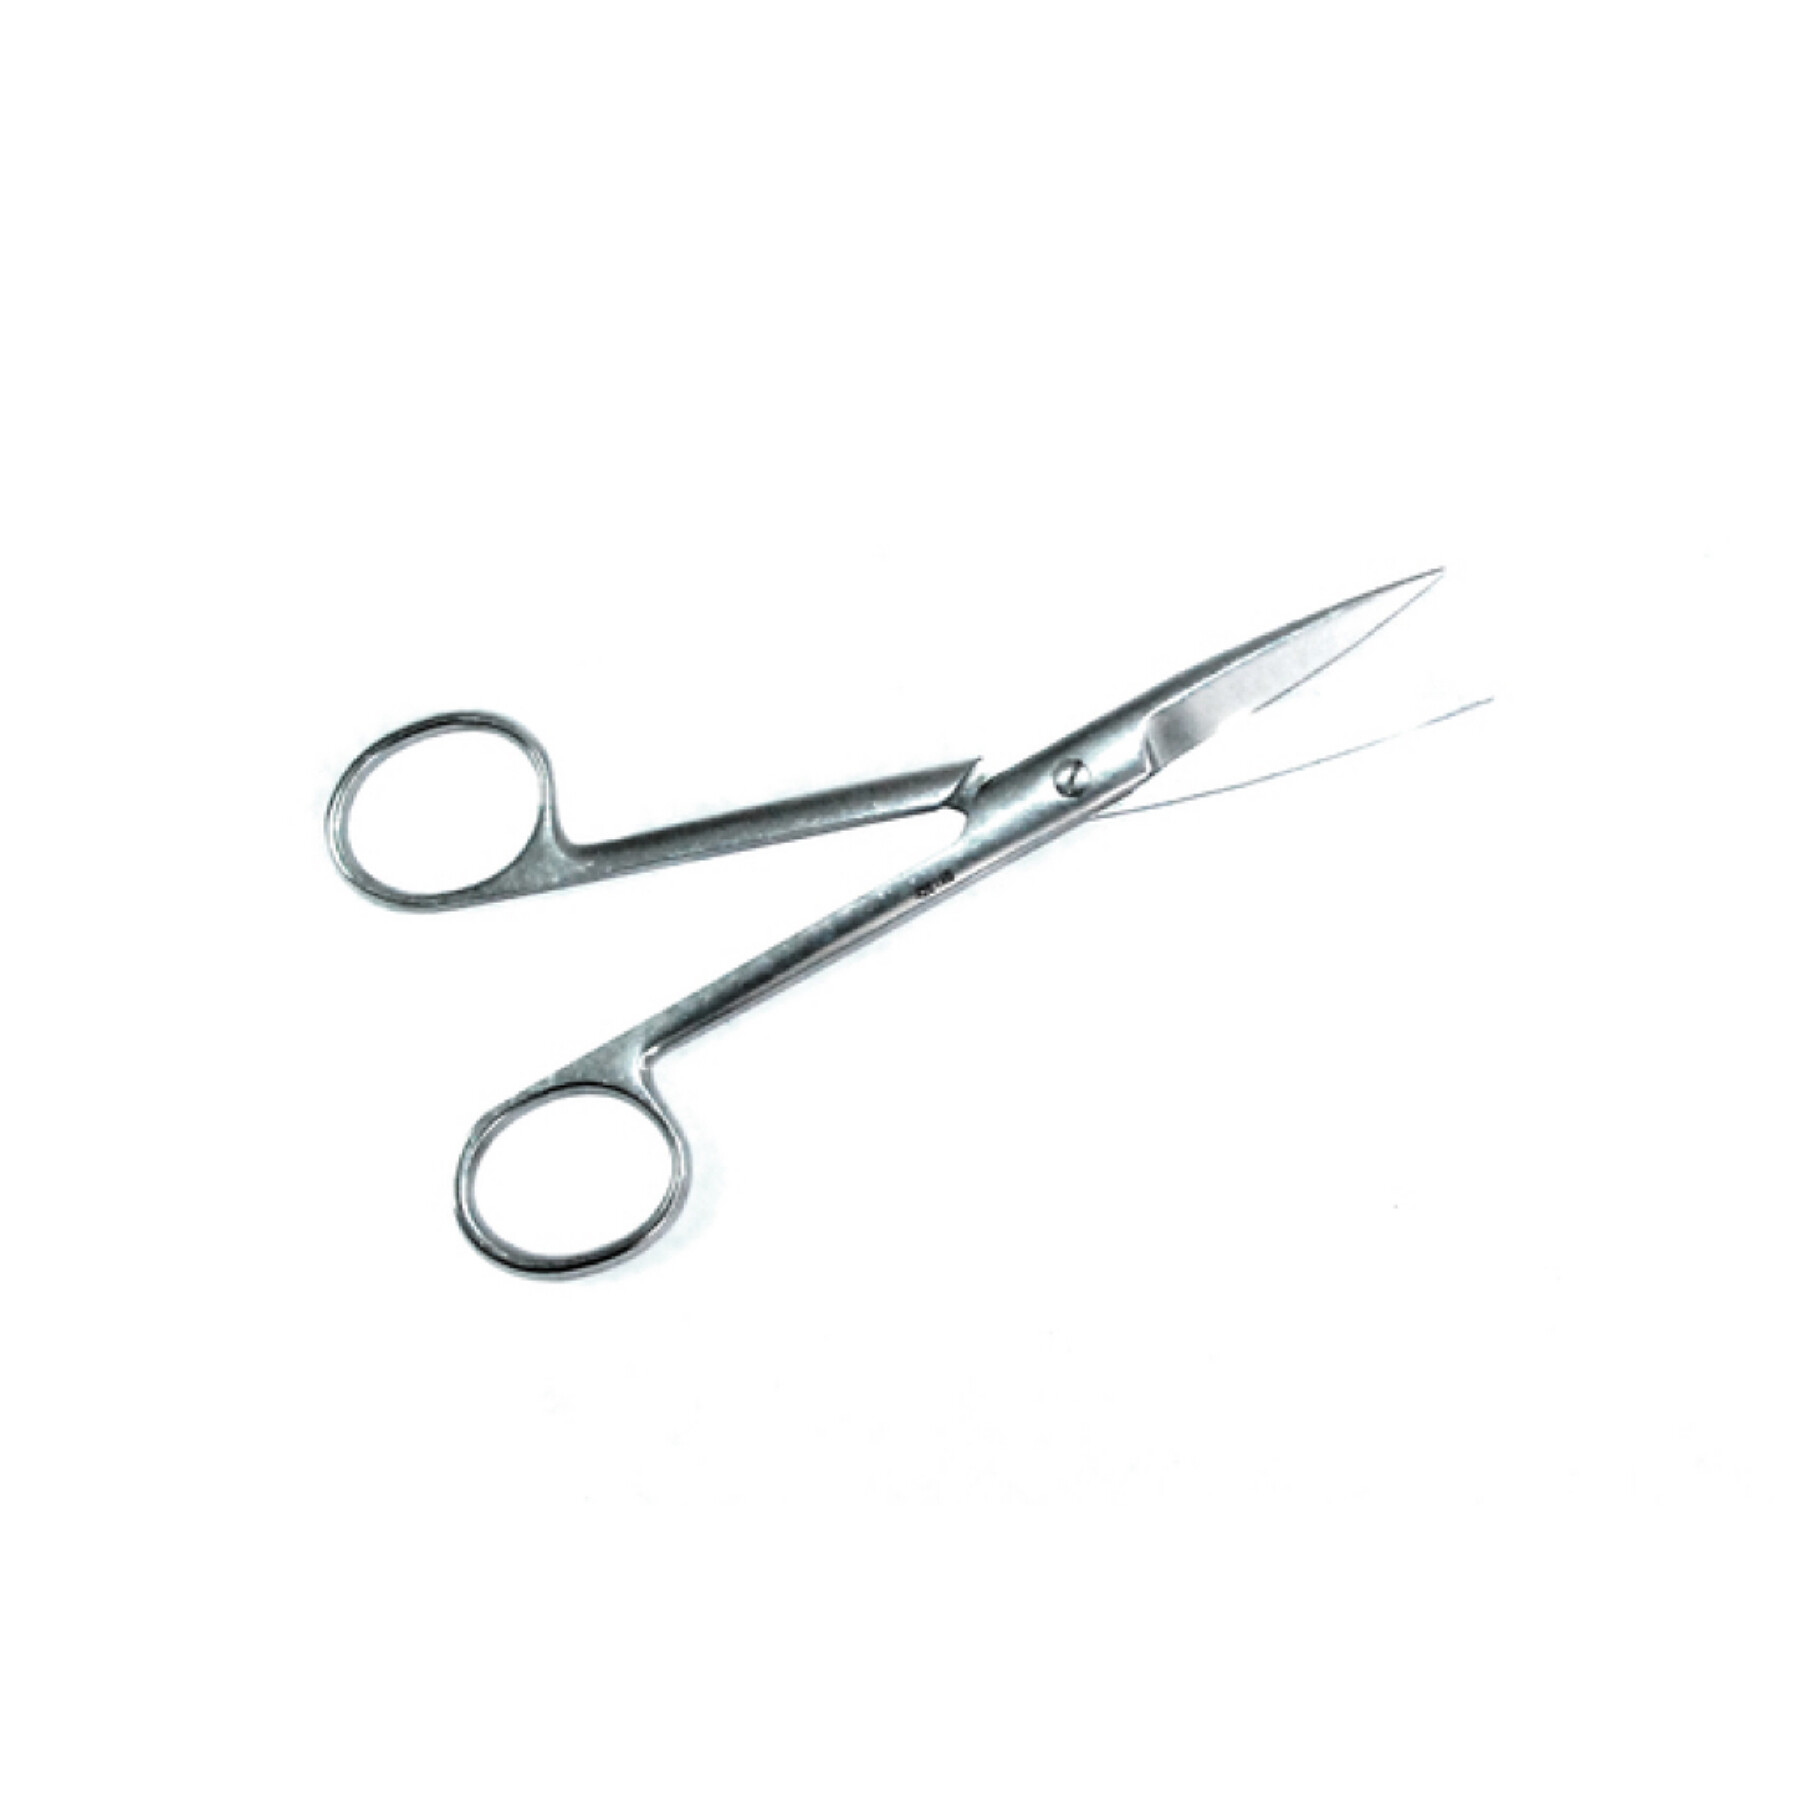 Scissors-straight pointed